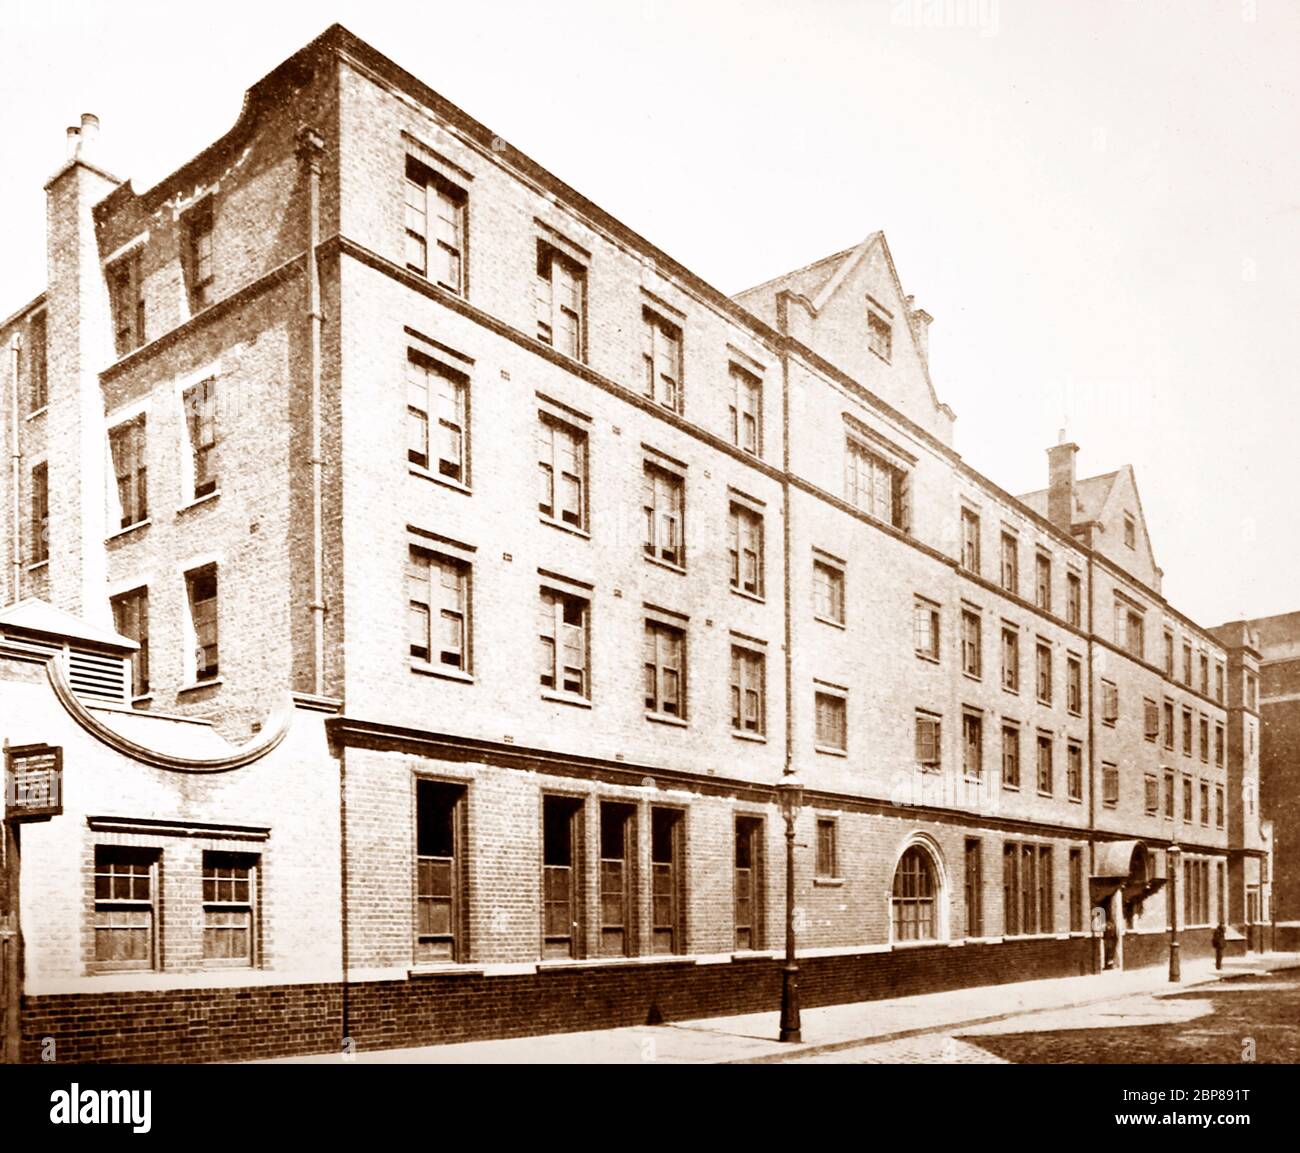 Parker Street Municipal Lodging House, London, Victorian period Stock Photo